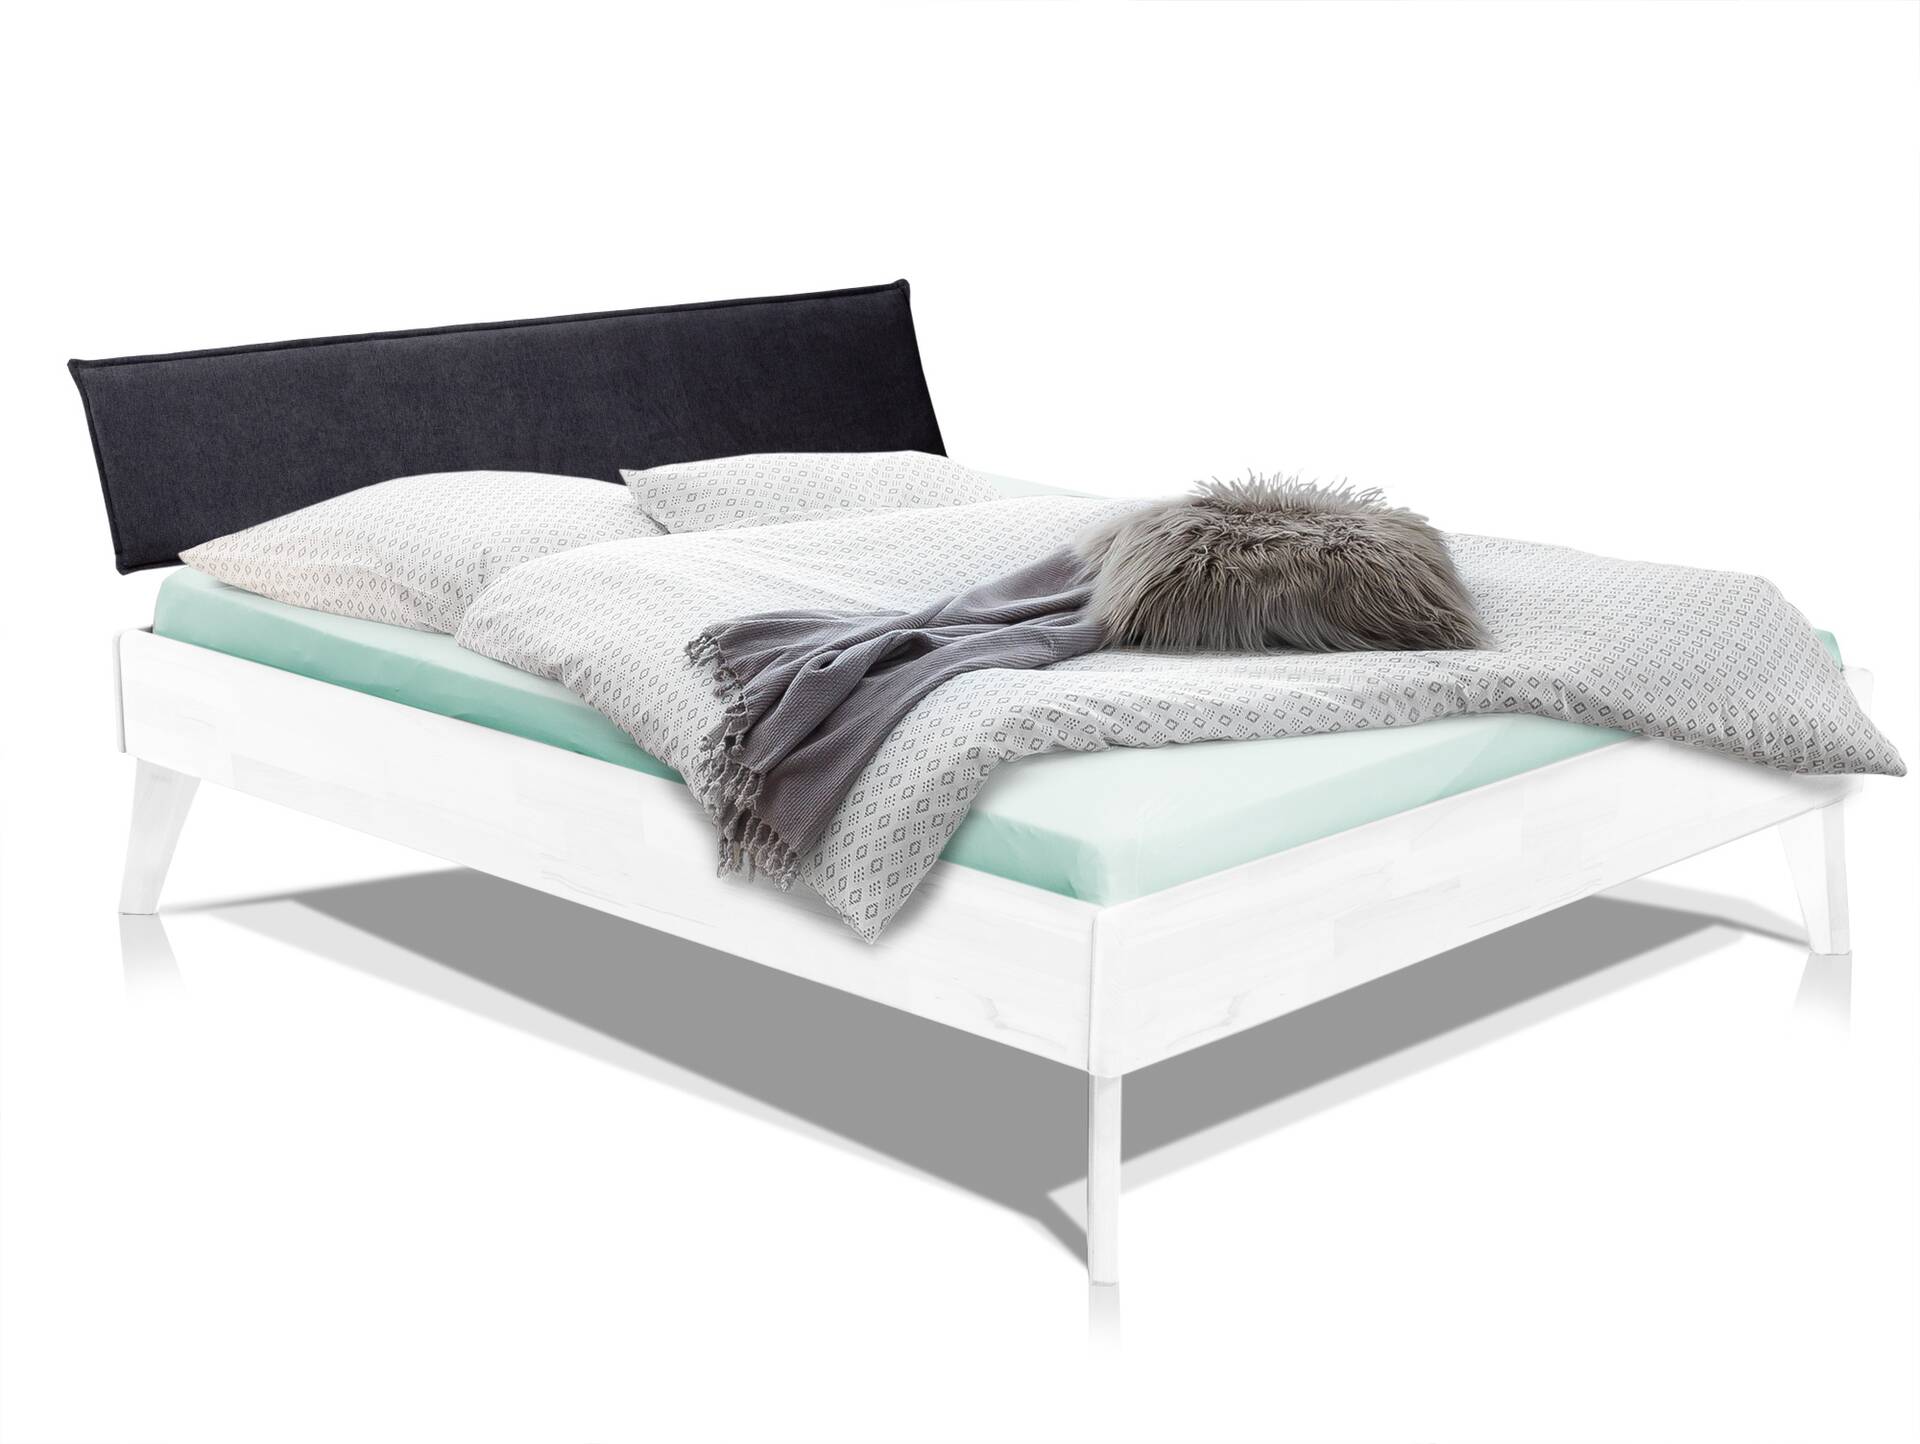 CALIDO 4-Fuß-Bett mit Polster-Kopfteil, Material Massivholz 90 x 220 cm | Buche weiss lackiert | Stoff Anthrazit | Komforthöhe